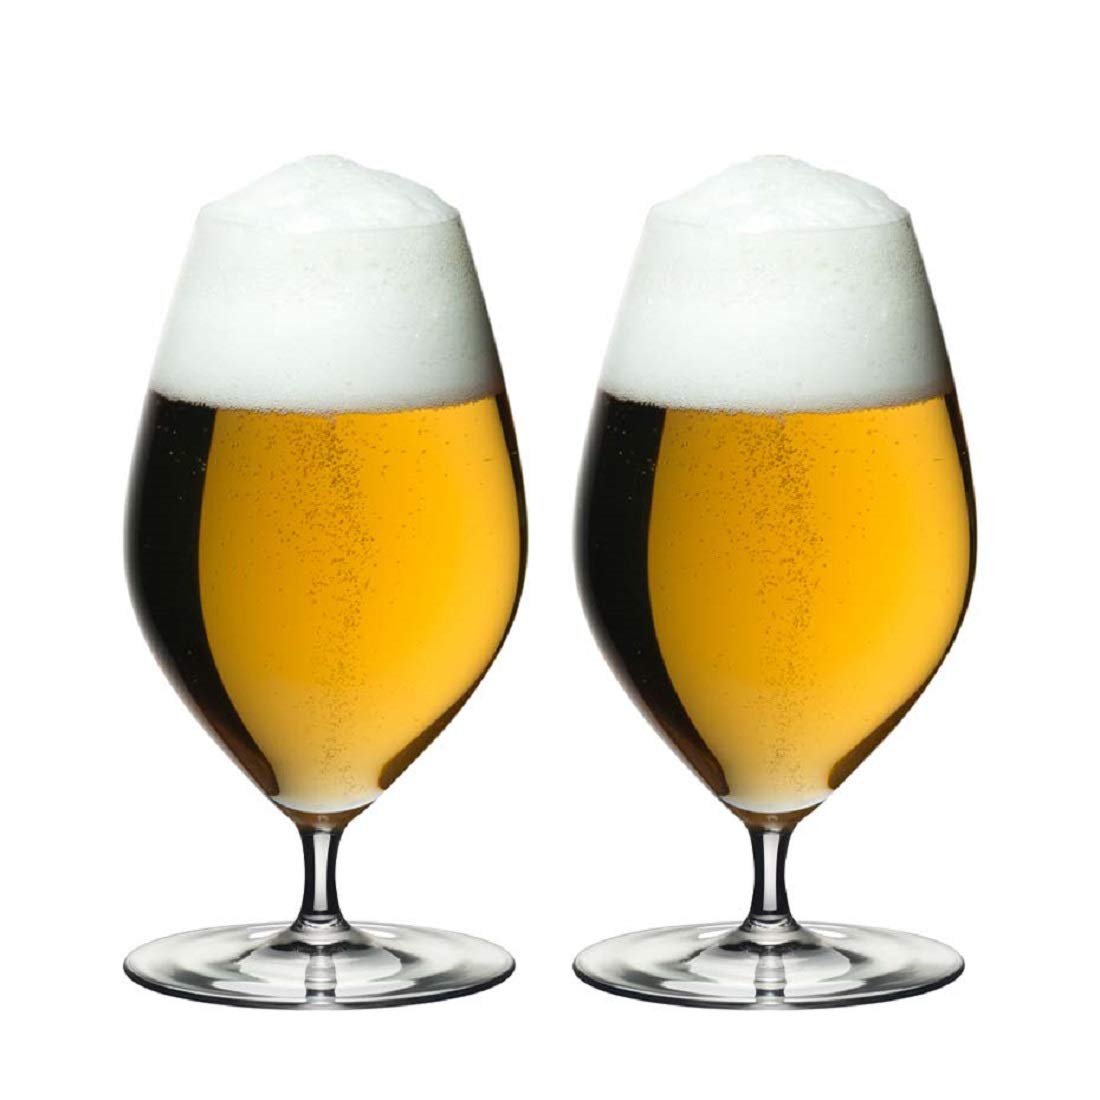 Riedel Veritas Beer Glasses - 2 Count (Pack of 1) - Clear